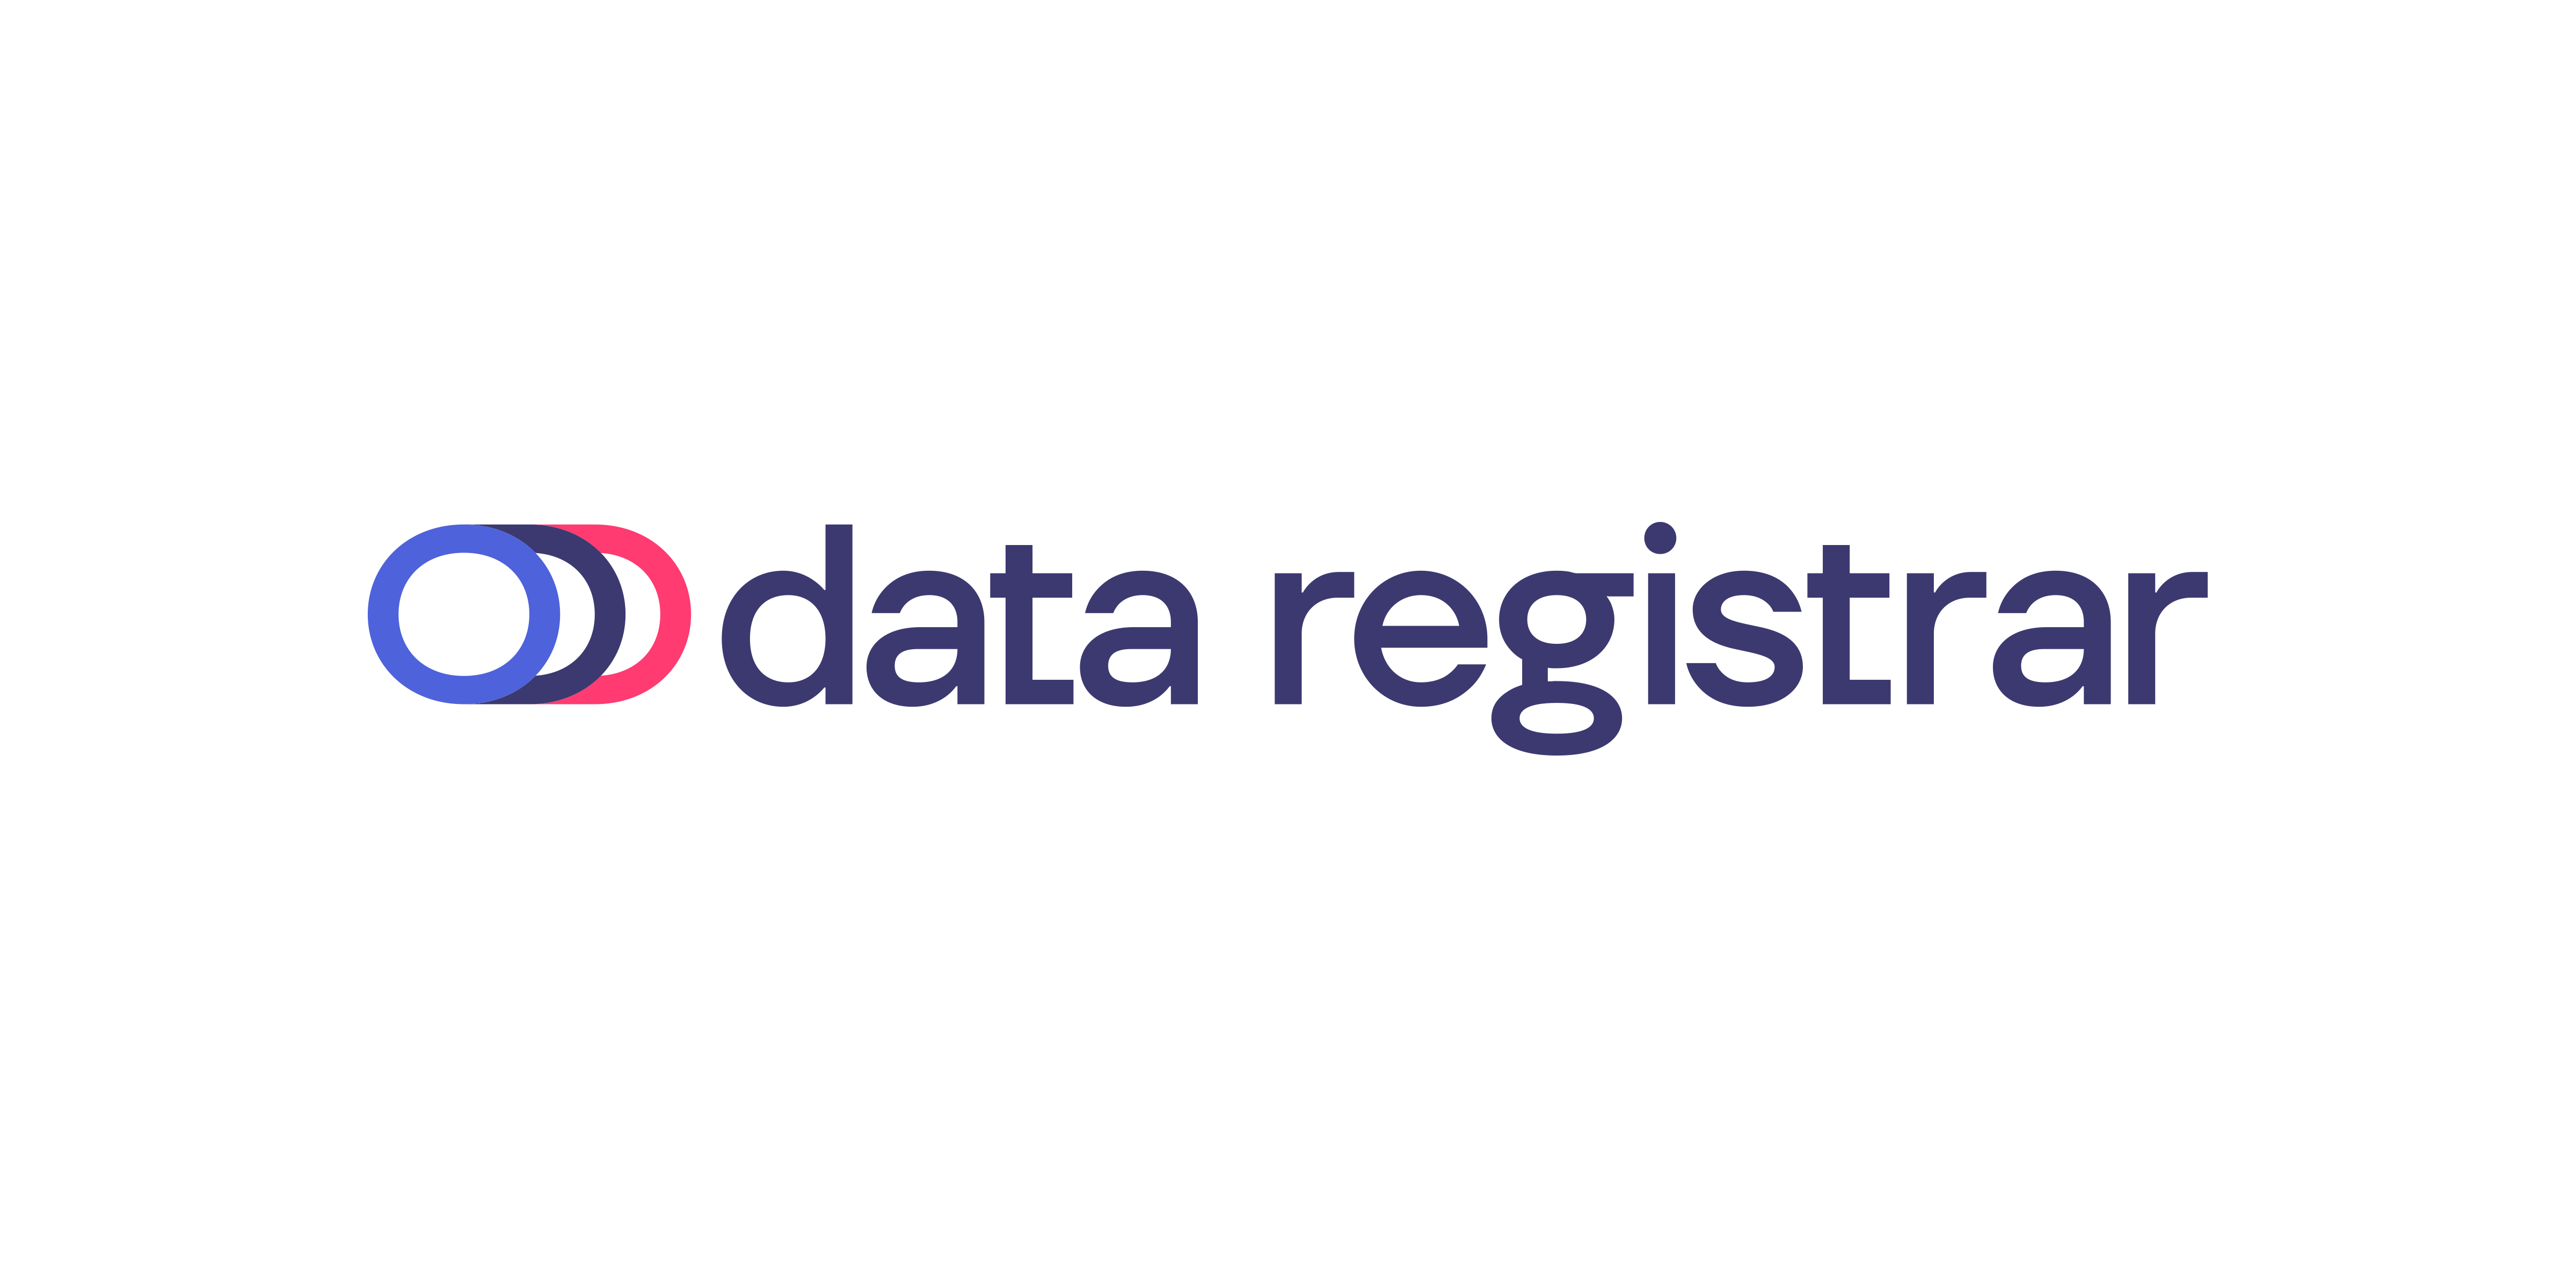 Data-Registrar Logo, Brand ID, Corporate Identity, Brochure 5